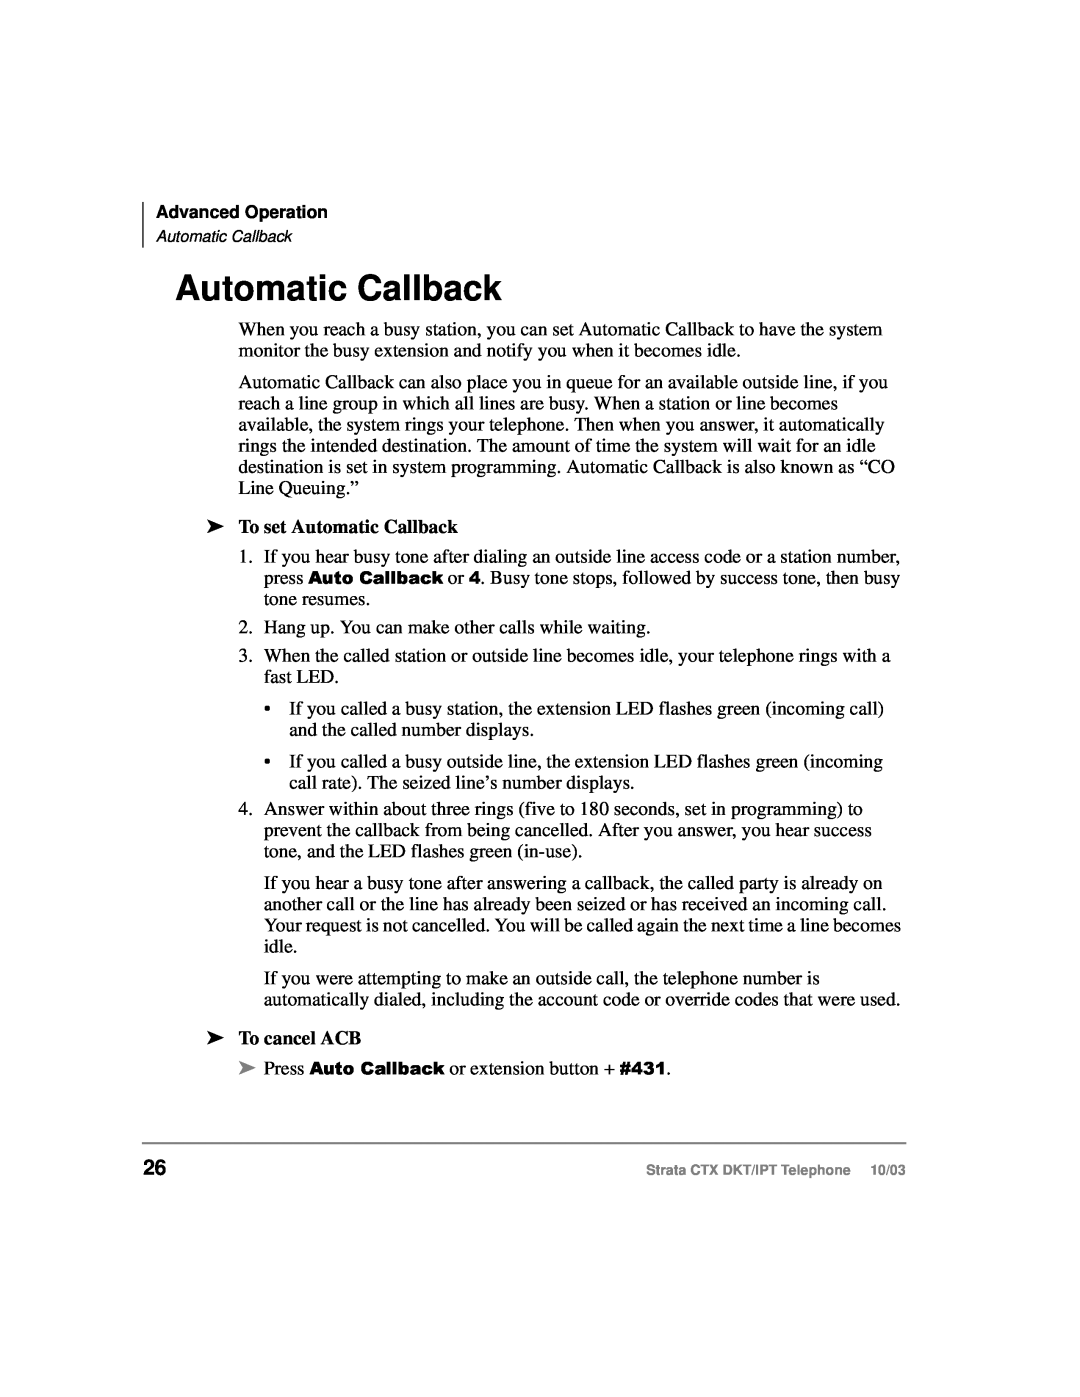 Toshiba IPT, DKT manual To set Automatic Callback, To cancel ACB 